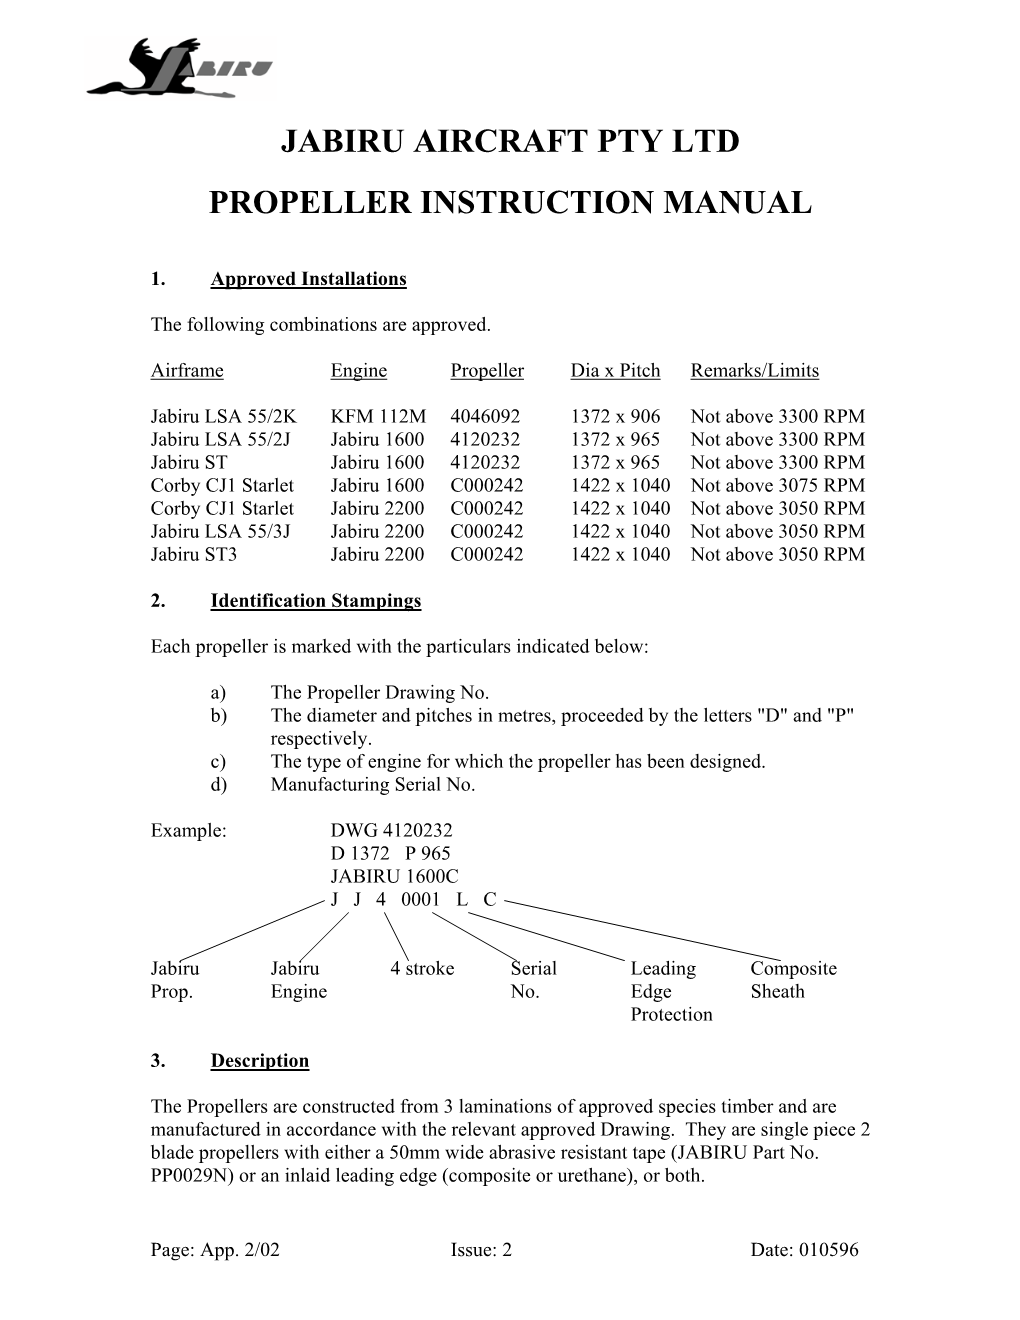 Jabiru Aircraft Pty Ltd Propeller Instruction Manual